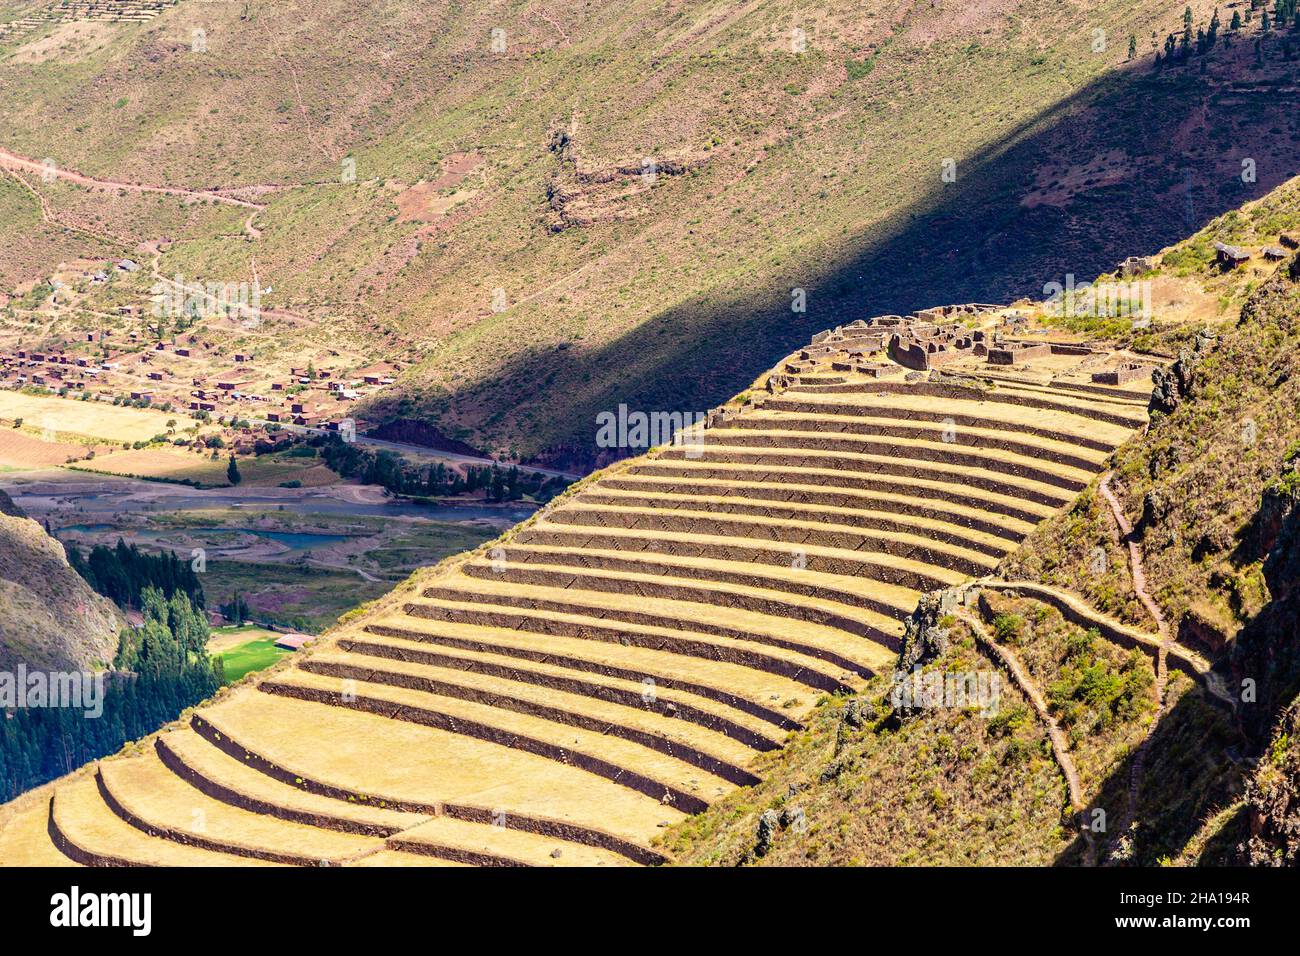 Ancient Incan farm terraces on the mountain slope, Pisac, Peru Stock Photo